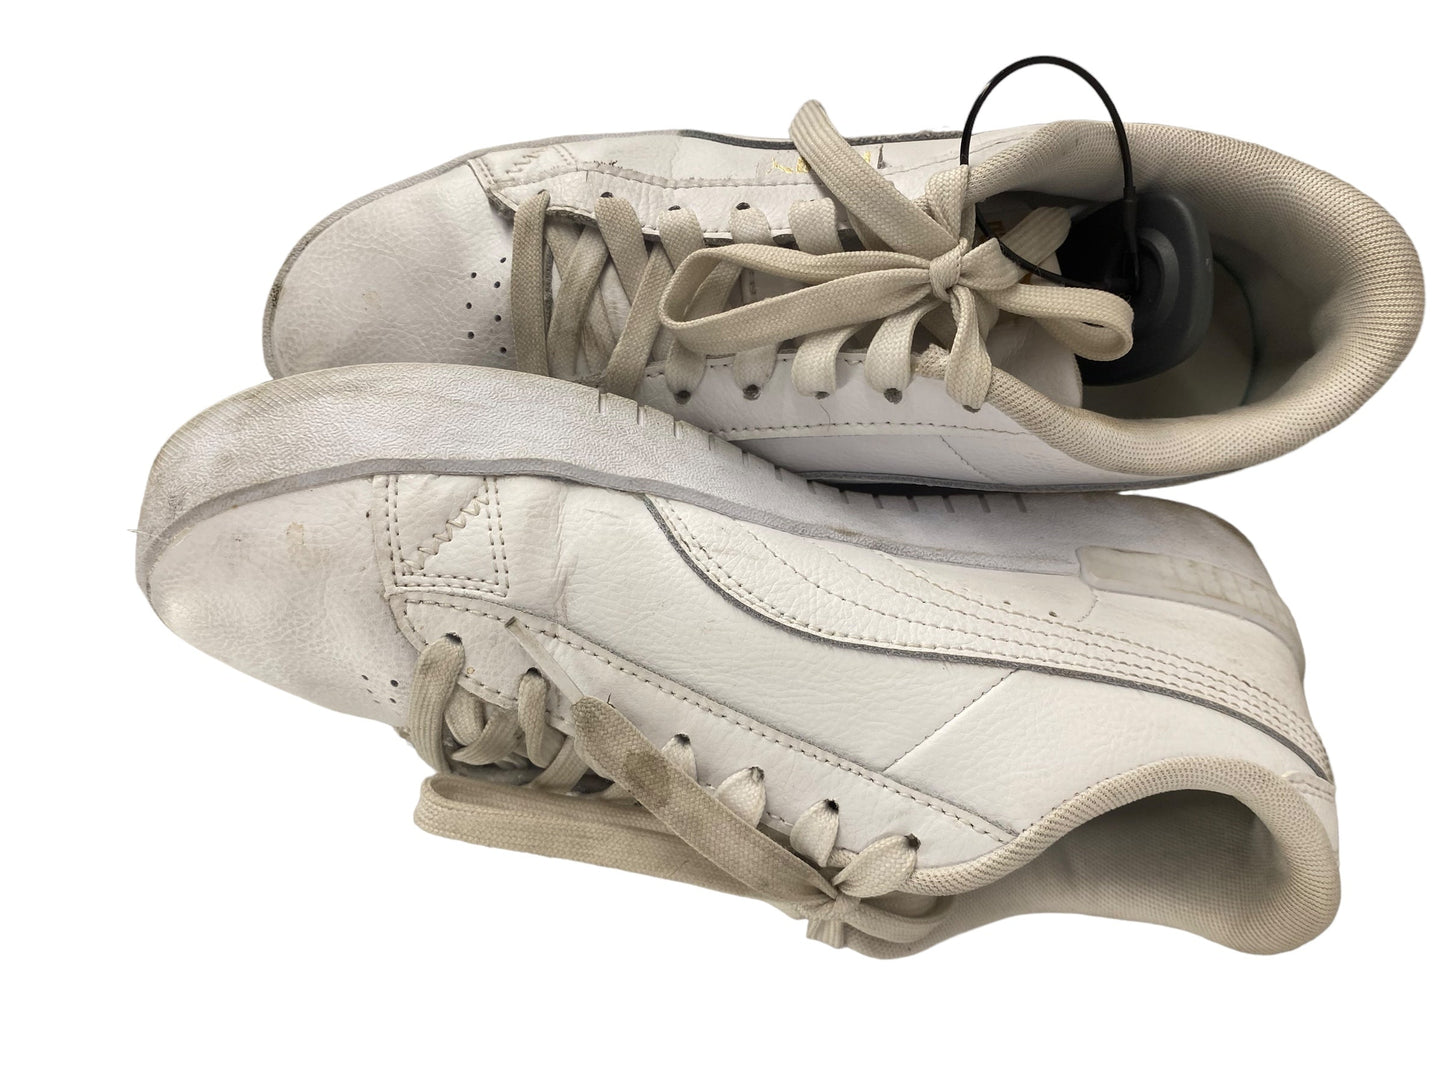 White Shoes Athletic Puma, Size 8.5